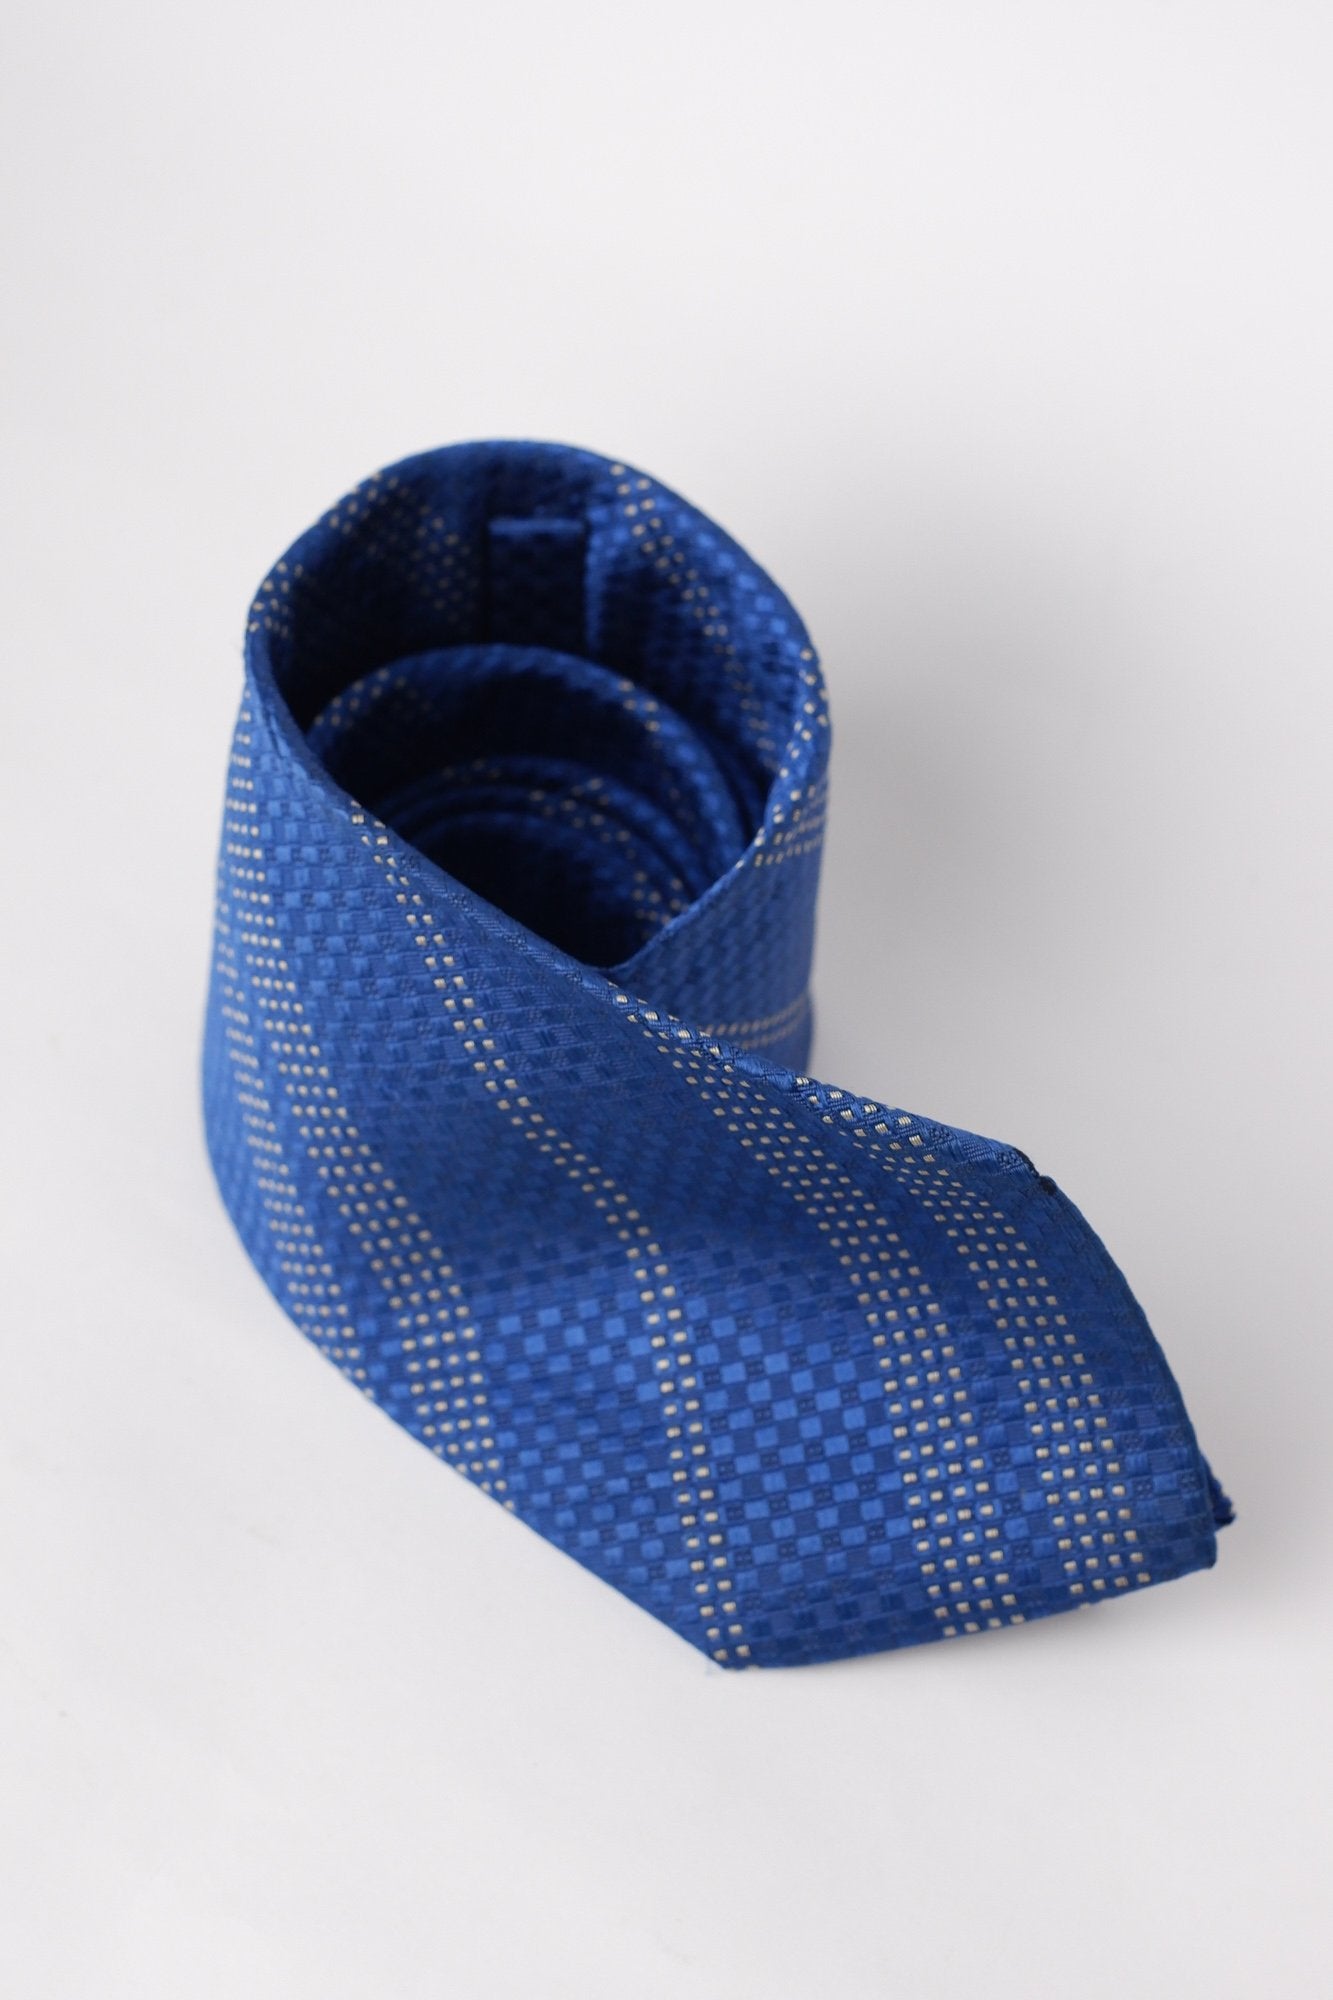 Lanolini Blue with Gold Stripes Necktie